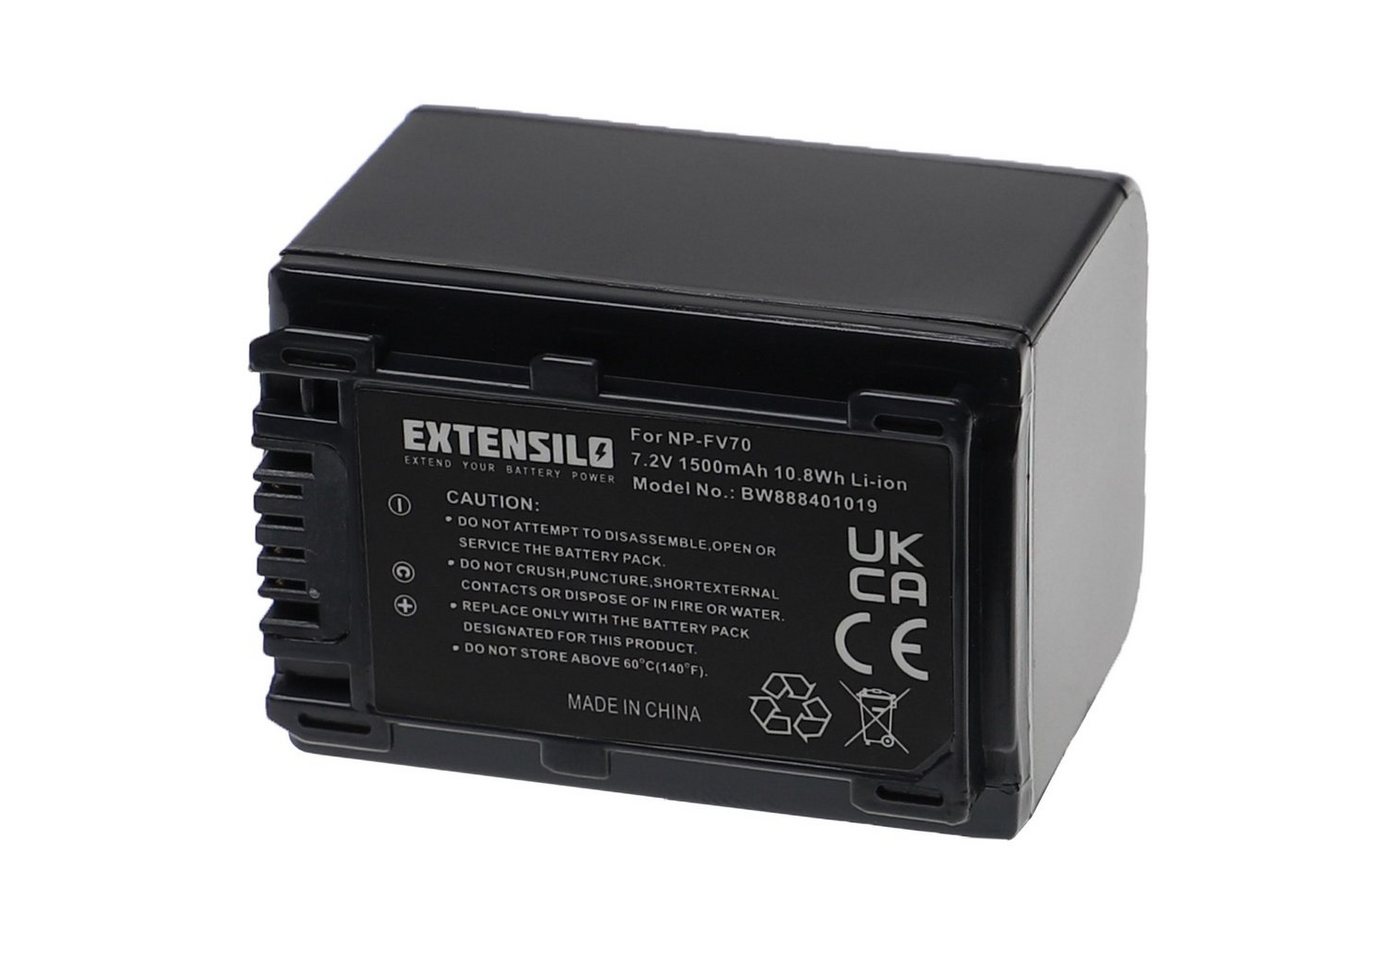 Extensilo passend für Sony HDR-CX130R, HDR-CX150, HDR-CX150E/B, HDR-CX150R, HDR-CX155VE, HDR-CX150E, HDR-CX155E Kamera / Camcorder Analog / Camcorder Digital (1500mAh, 7,2V, Li-Ion) Kamera-Akku 1500 mAh von Extensilo